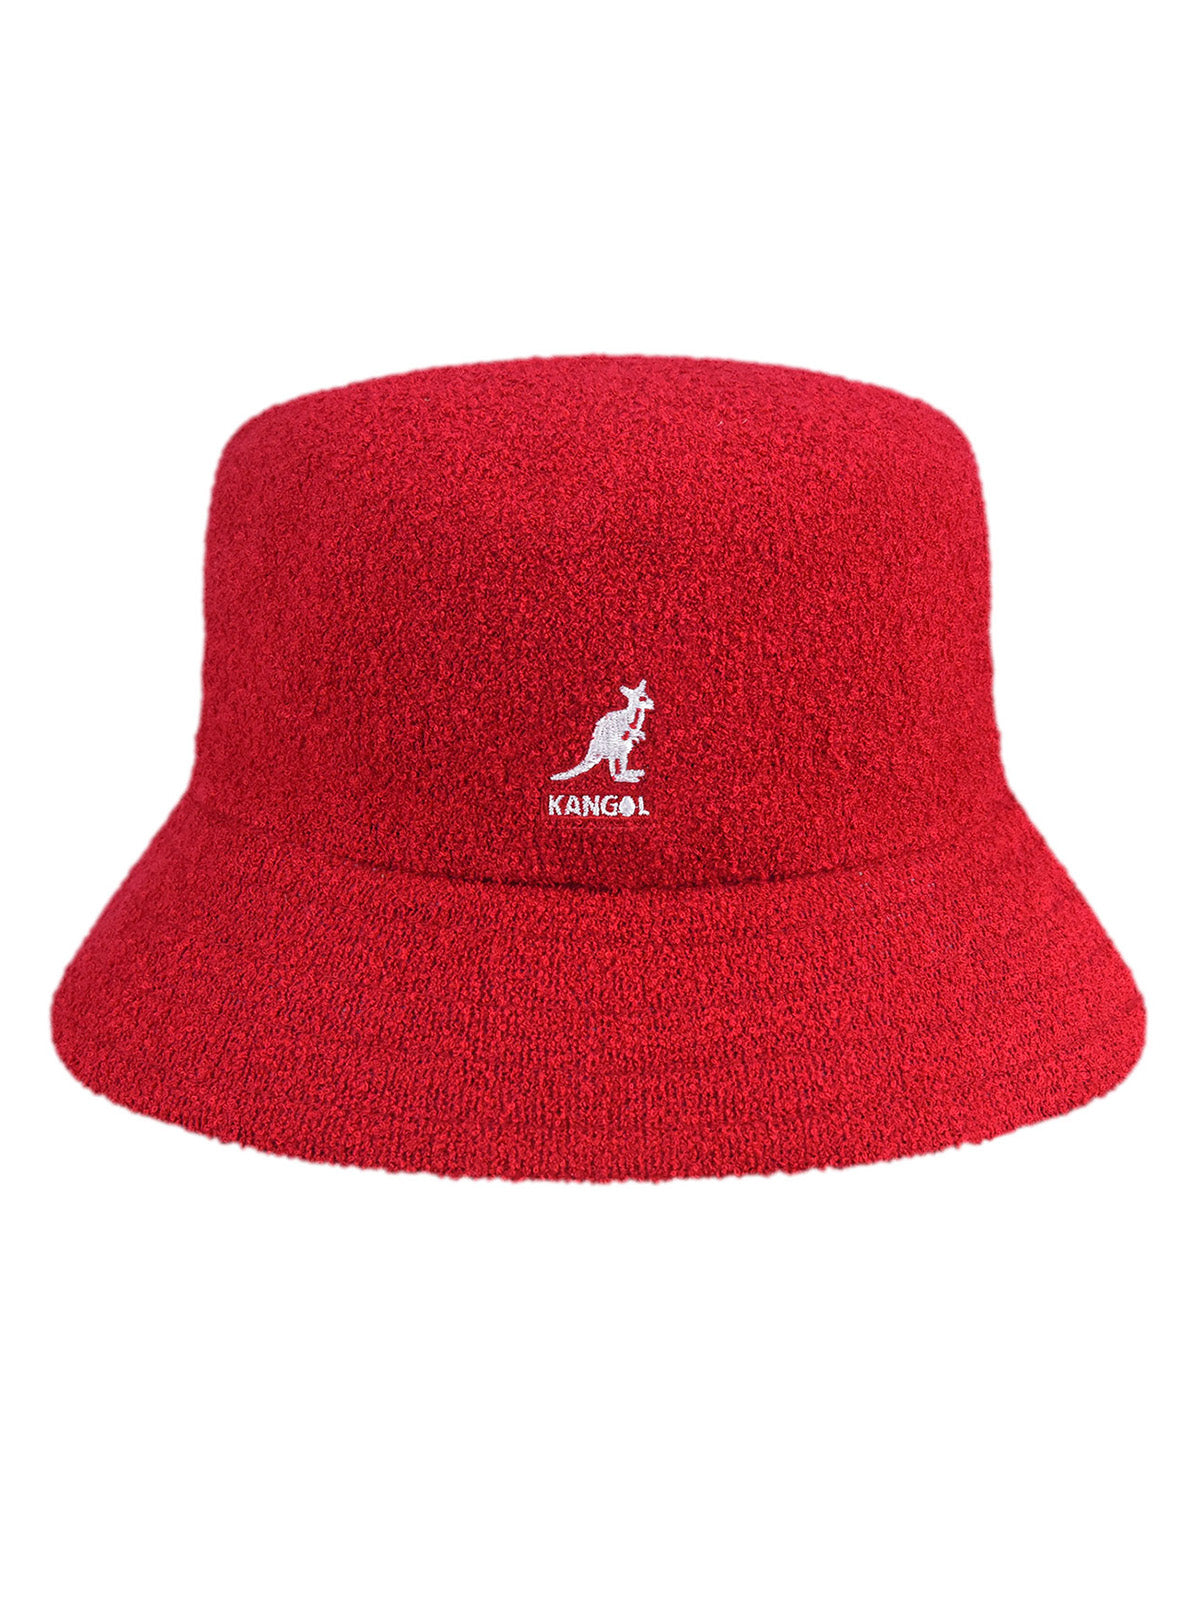 Kangol Unisex Bucket Hats - Kangol Bermuda Bucket - Red